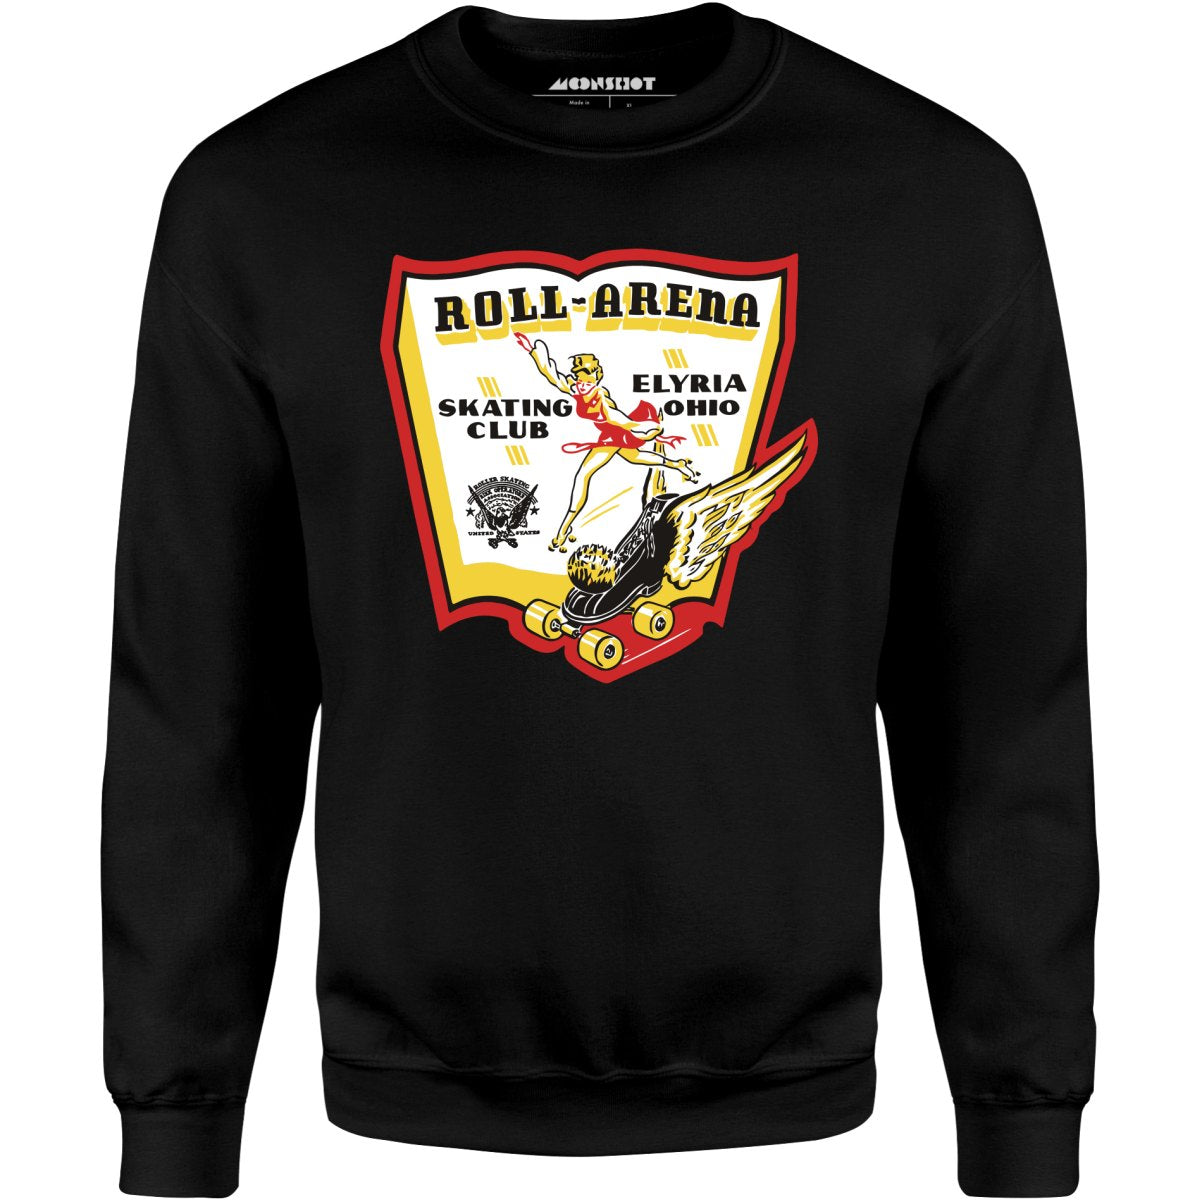 Roll-Arena - Elyria, OH - Vintage Roller Rink - Unisex Sweatshirt